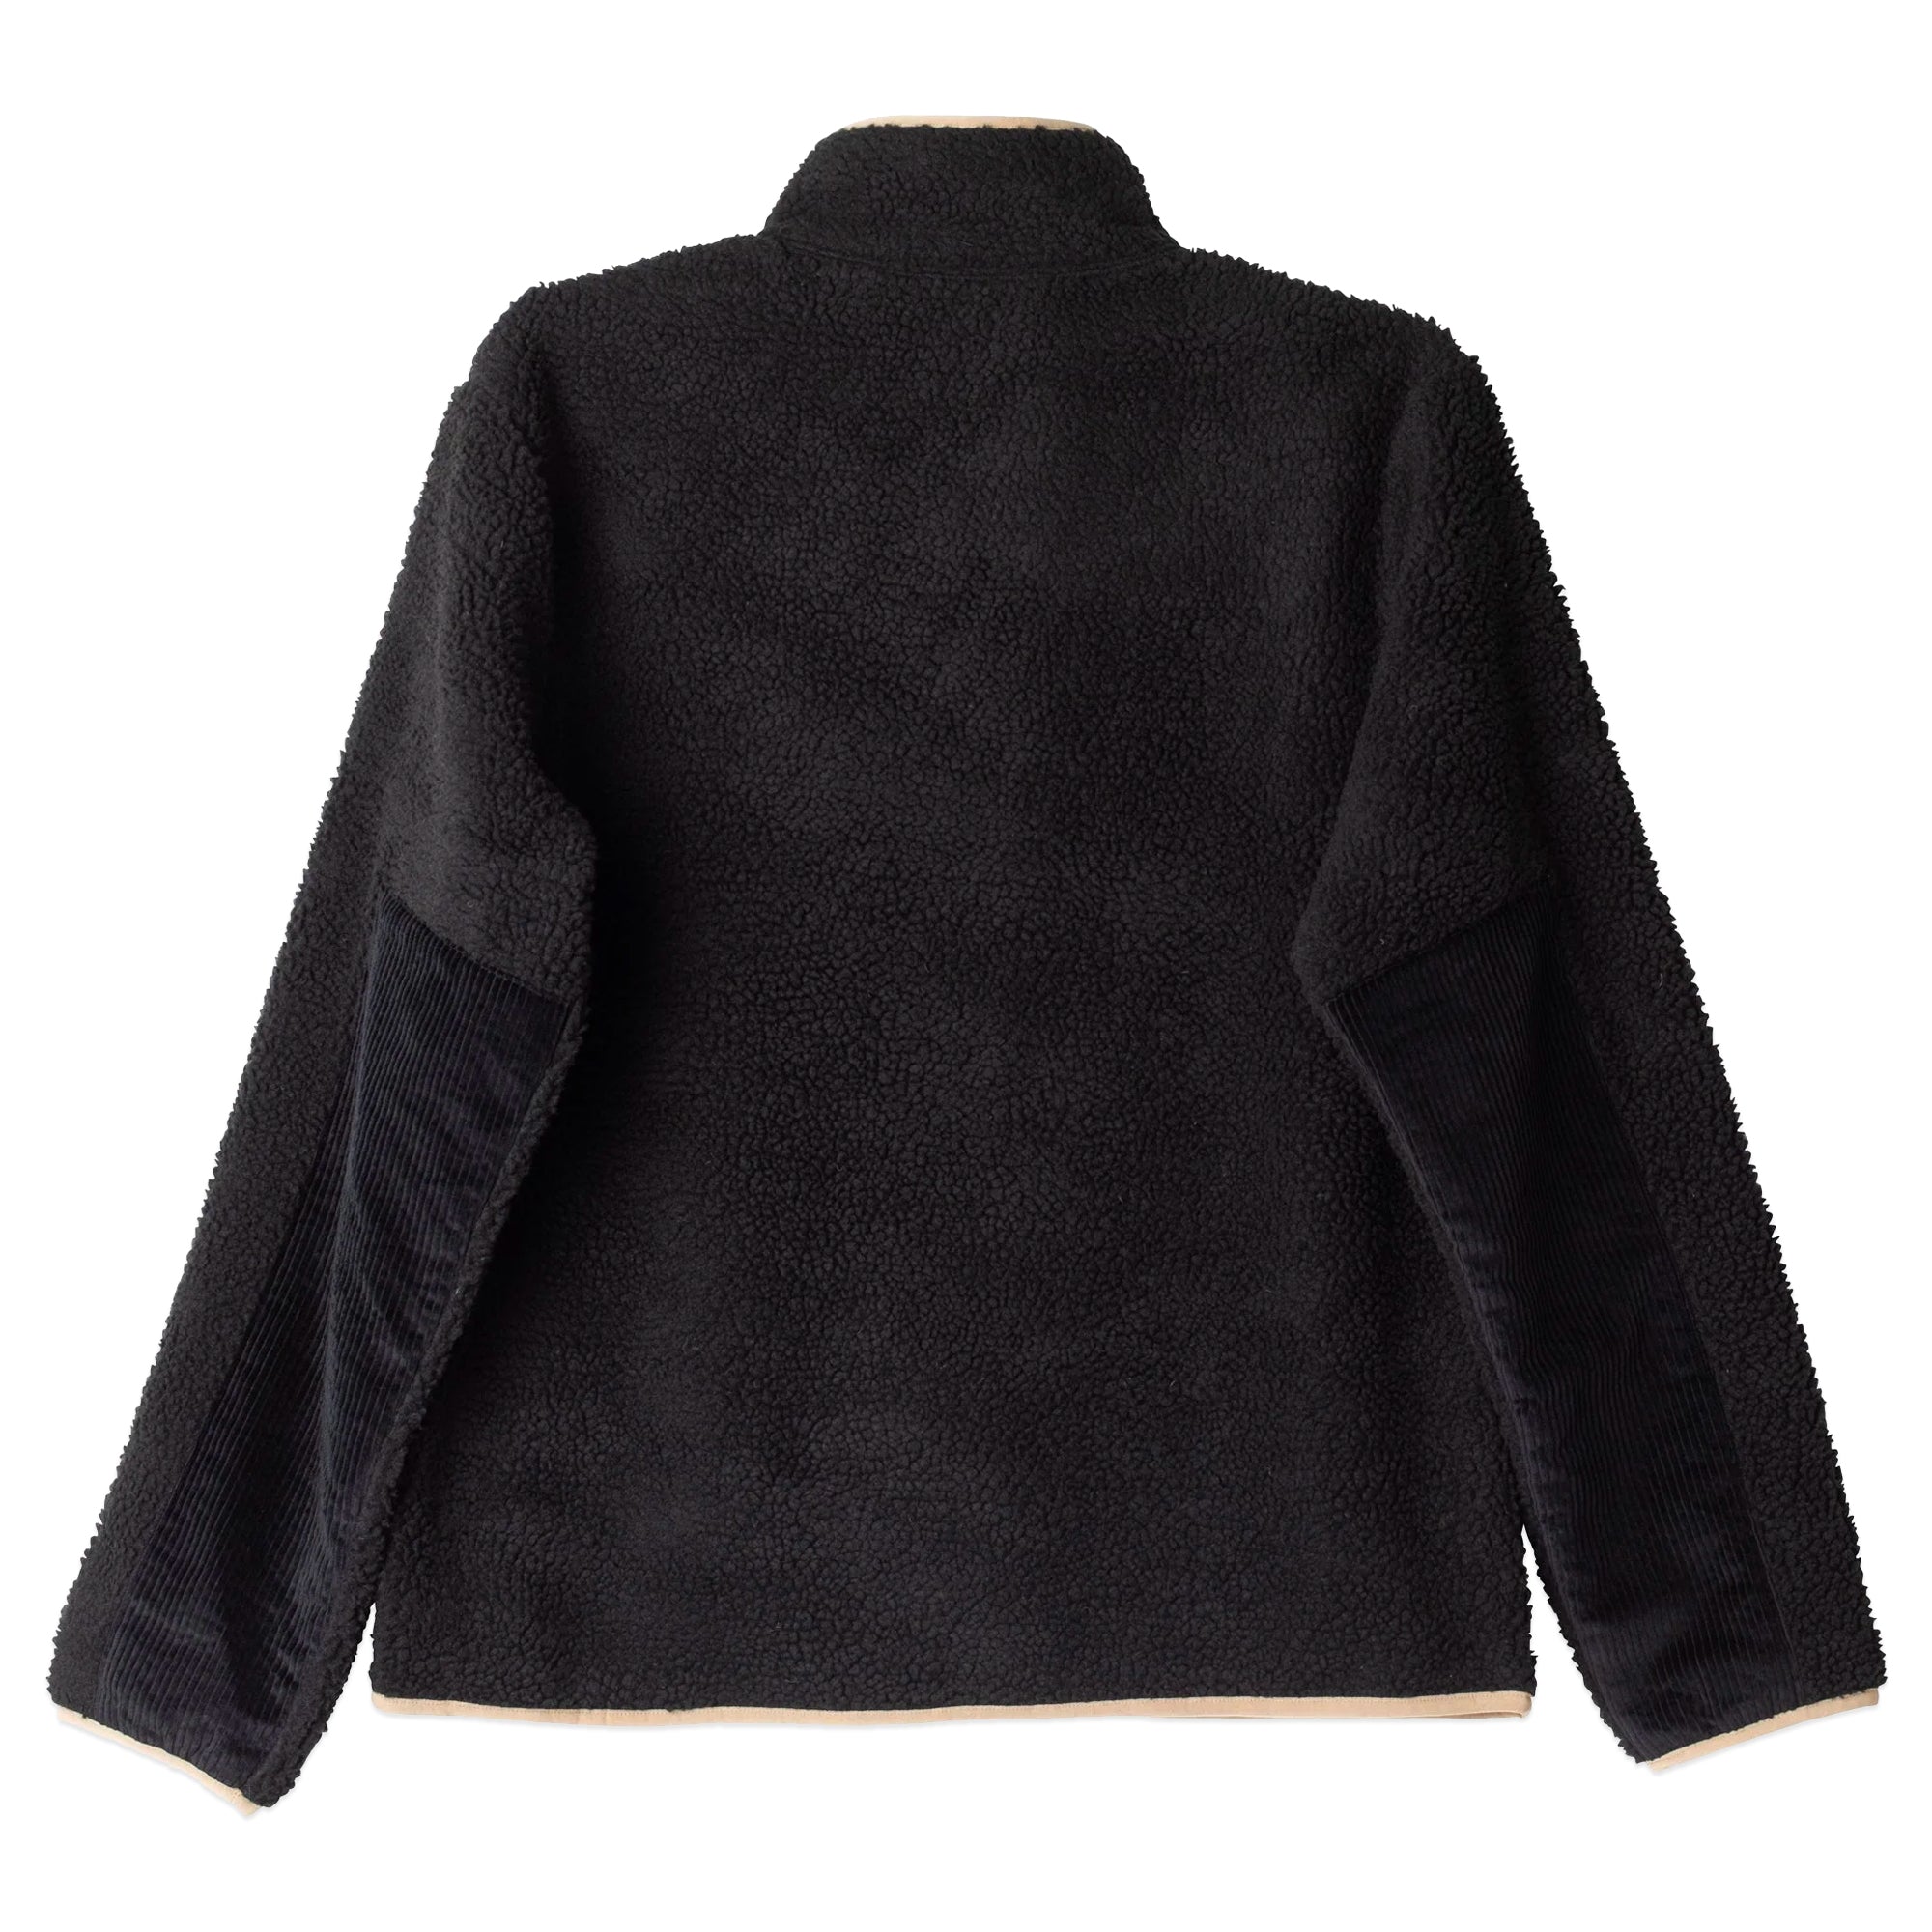 KAVU Wayside Full Zip Fleece Jacket - Black